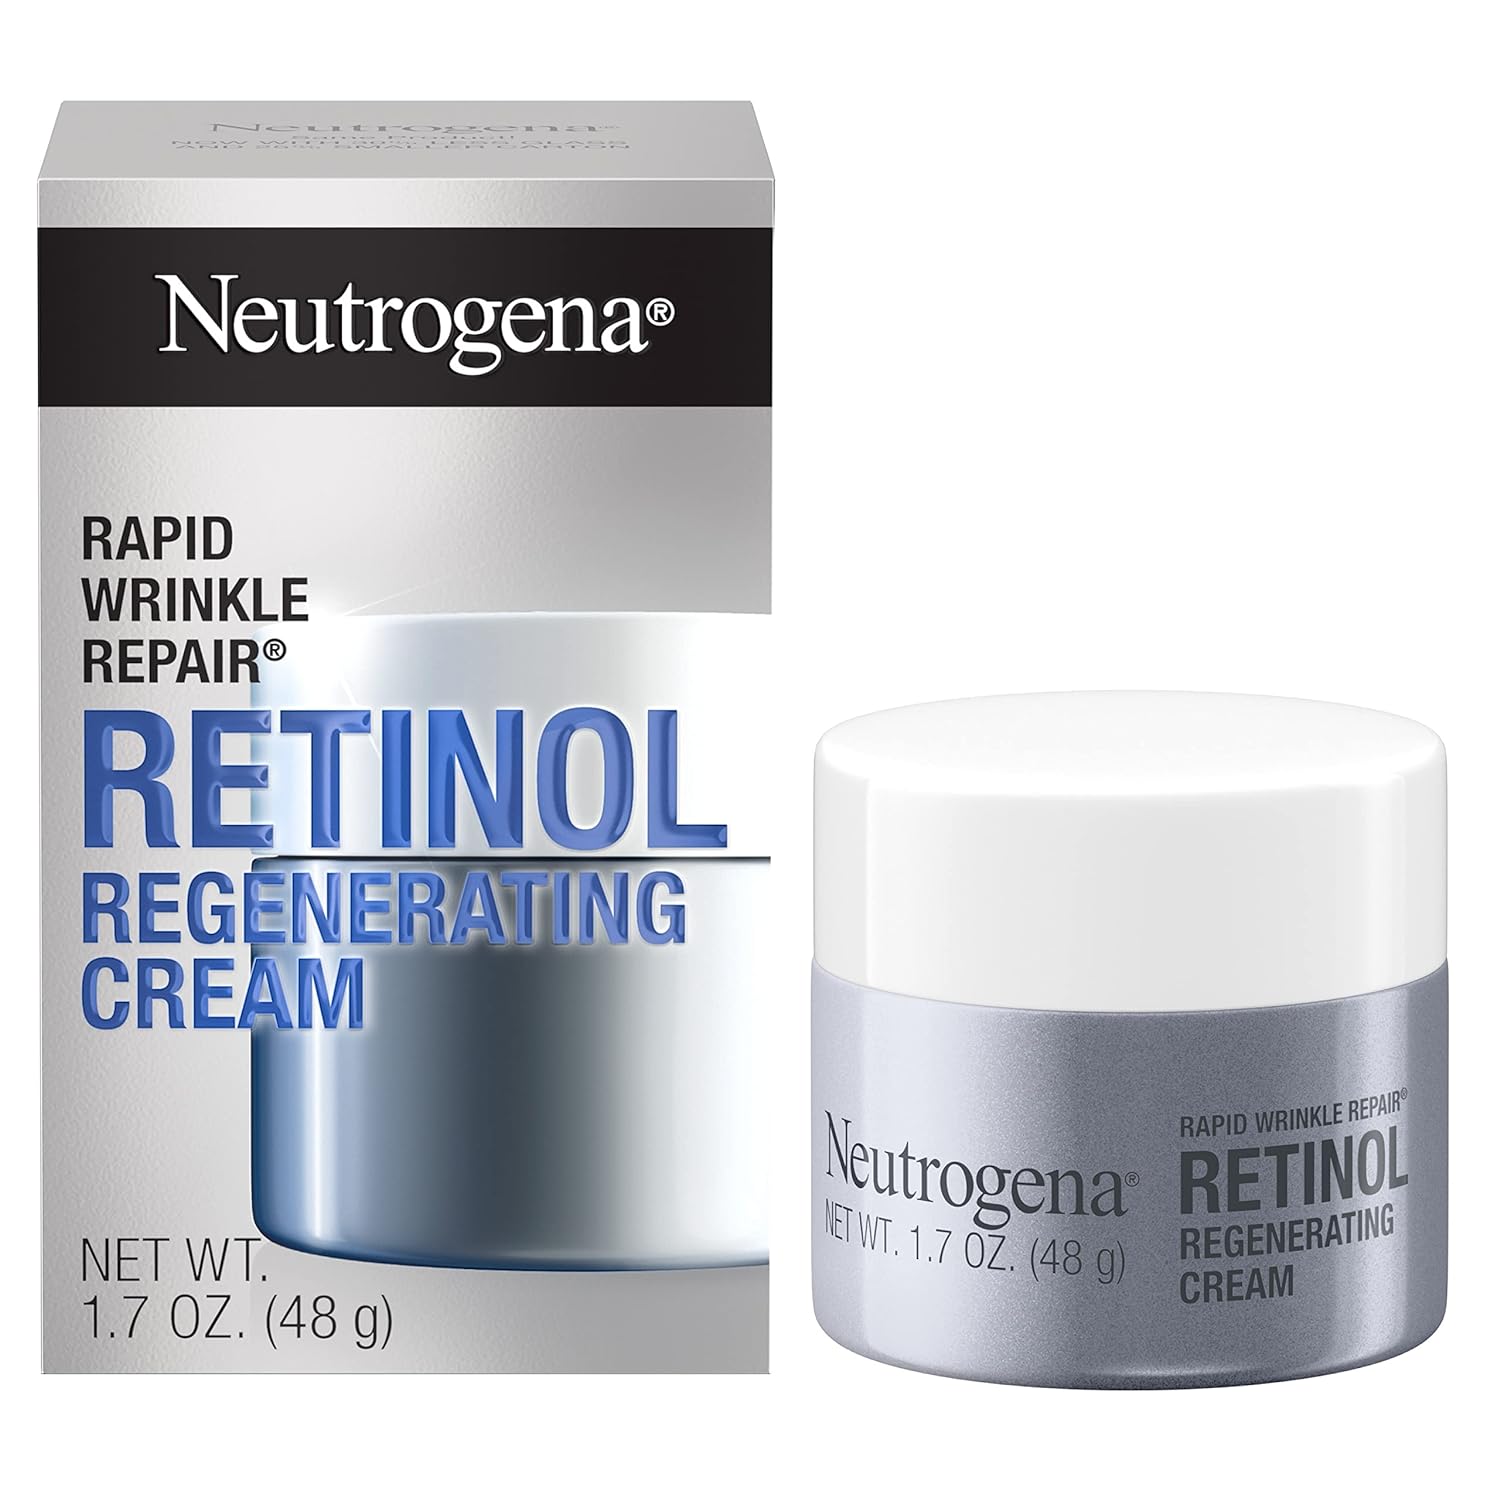 Neutrogena Rapid Wrinkle Repair Retinol Face Moisturize